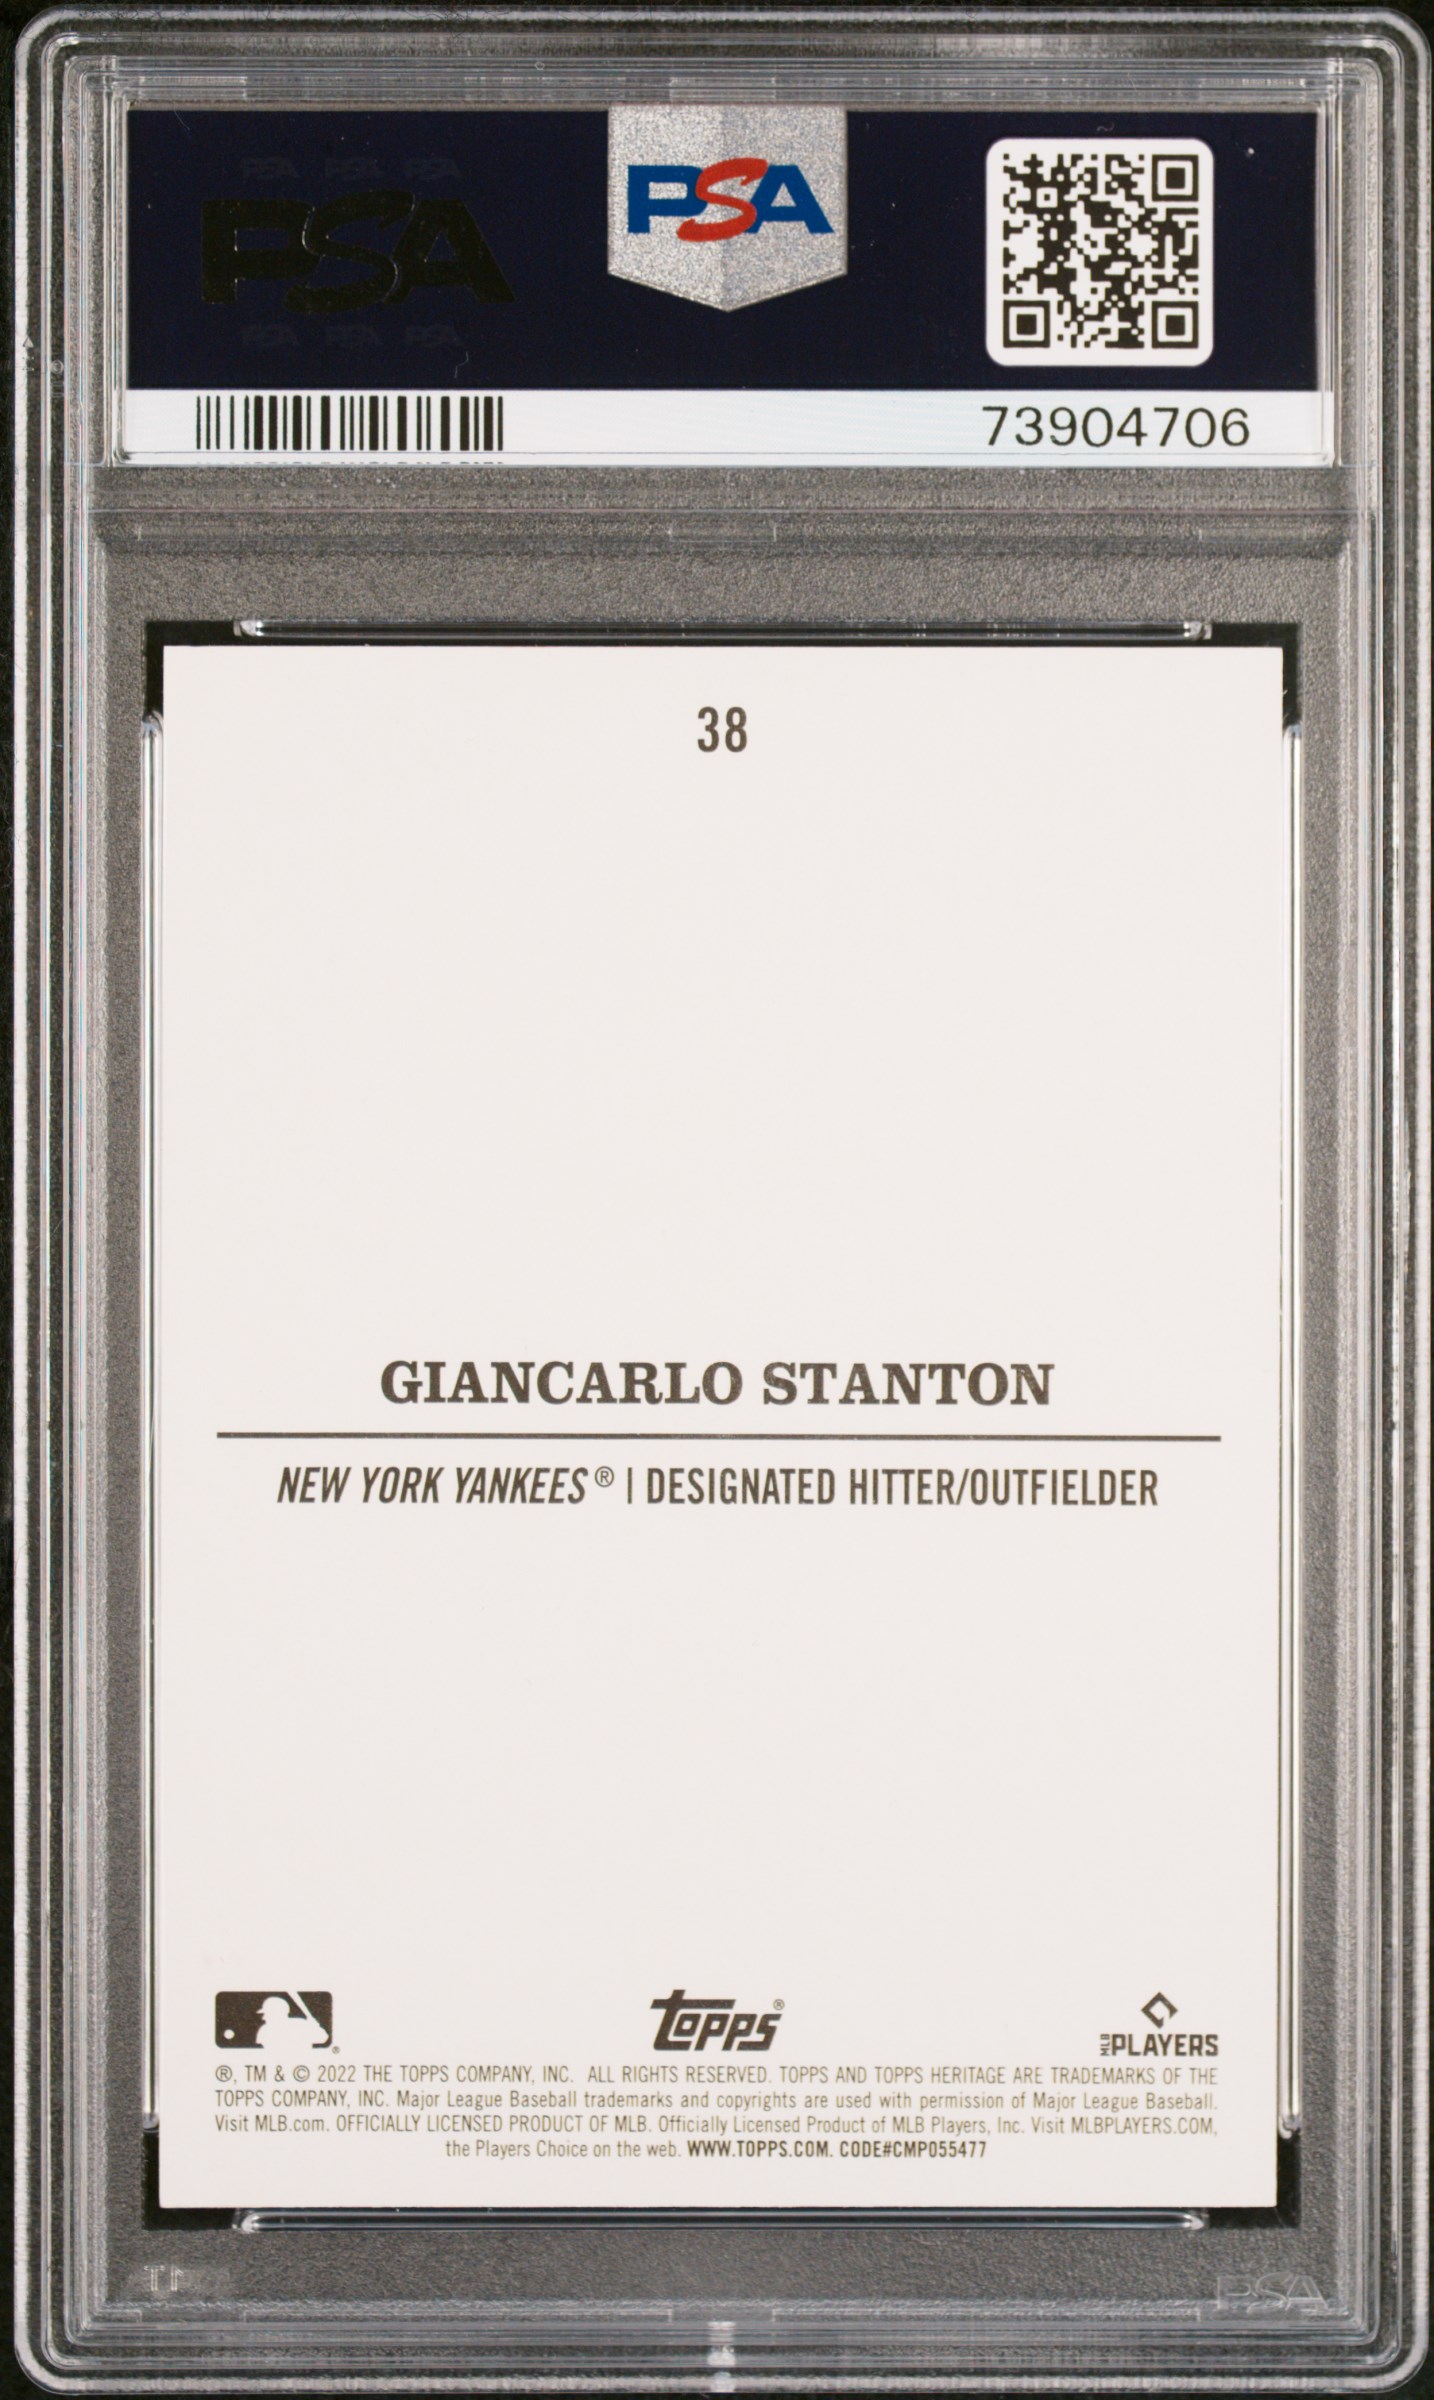 PSA Set Registry Showcase: Giancarlo Stanton rookies